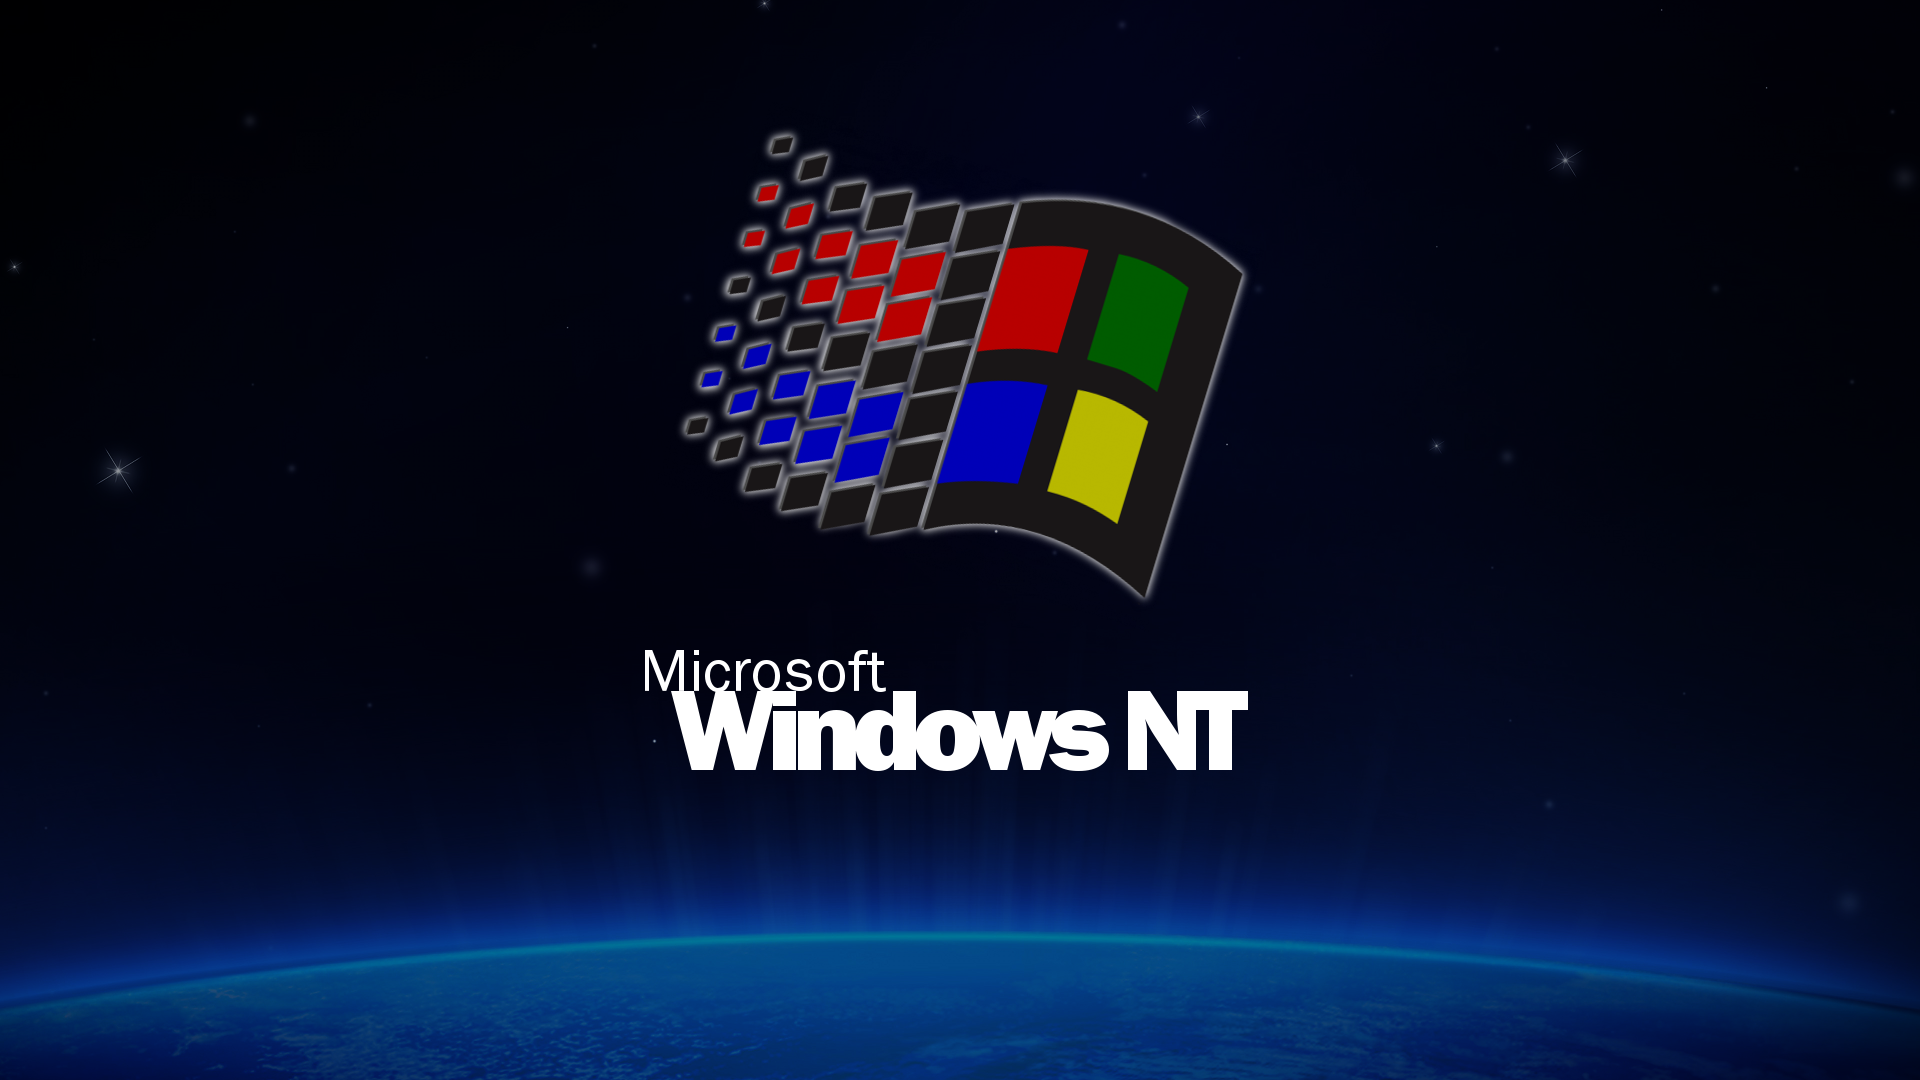 Windows nt build. Windows NT 4 Workstation. Виндовс НТ 4.0. ОС MS Windows NT 4.0 Server. Windows NT 3.1 Workstation.